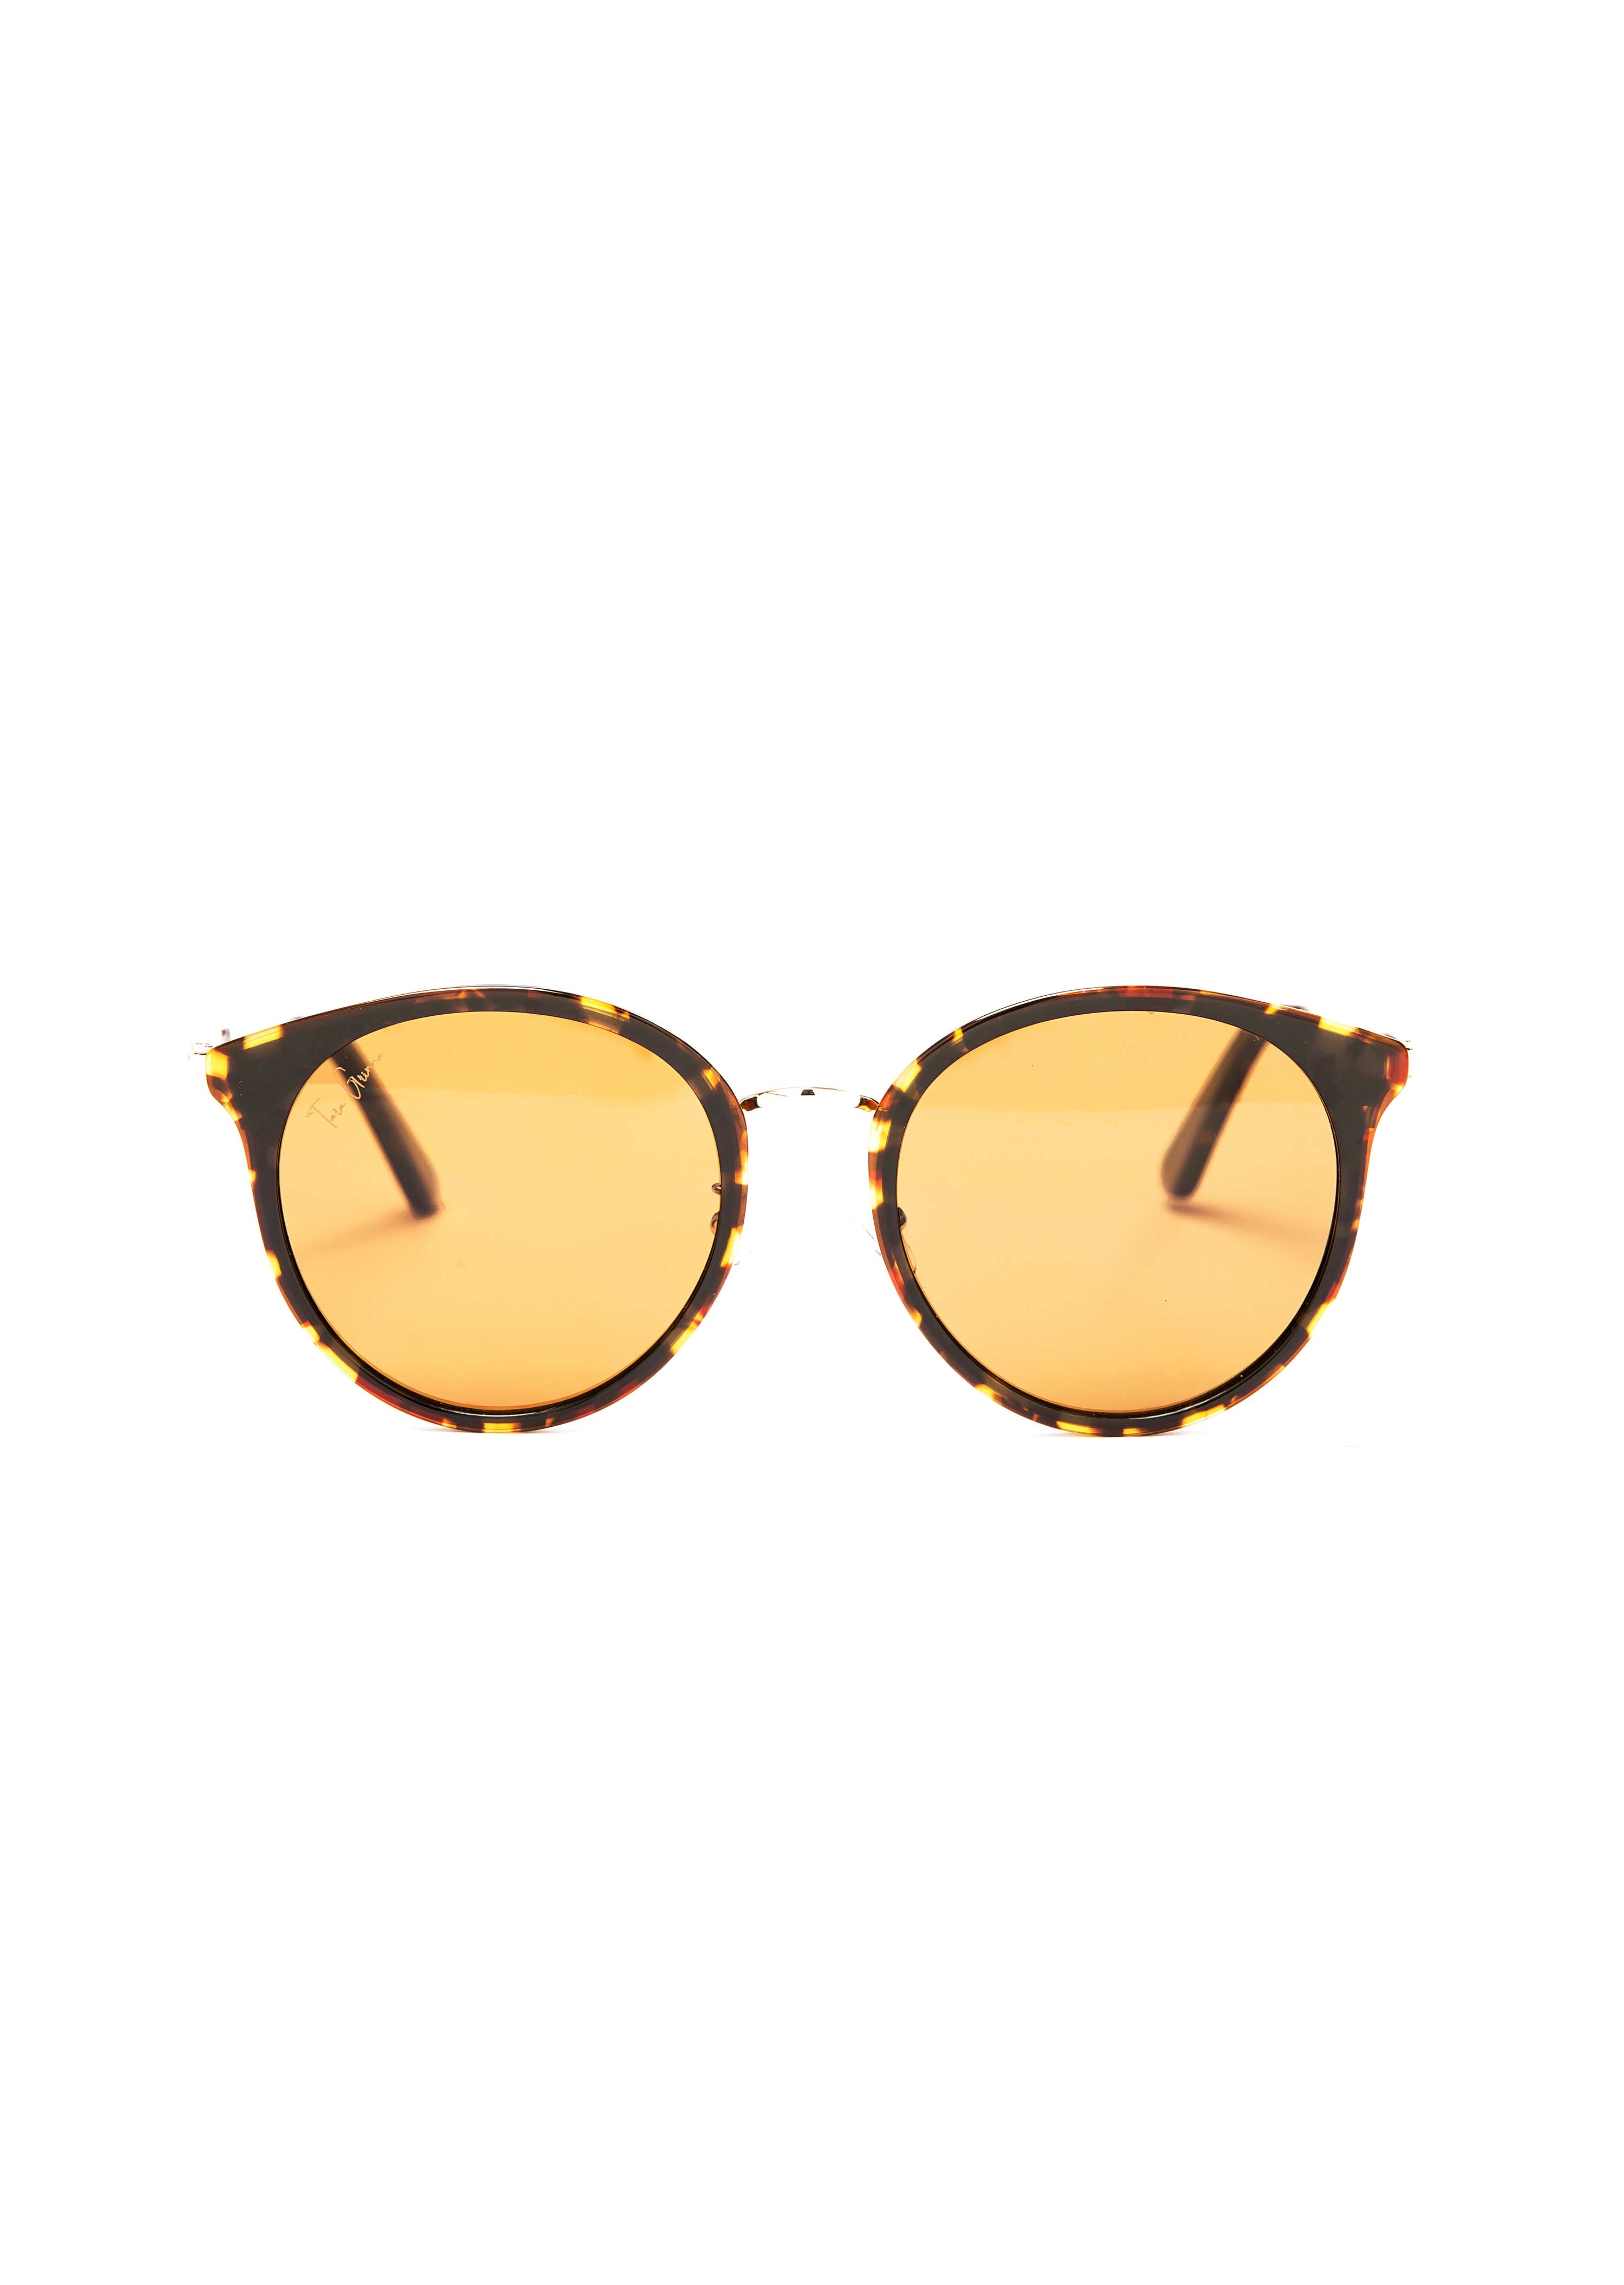 Modern Round Cateye Polarized Sunglasses (style M1808-C2)